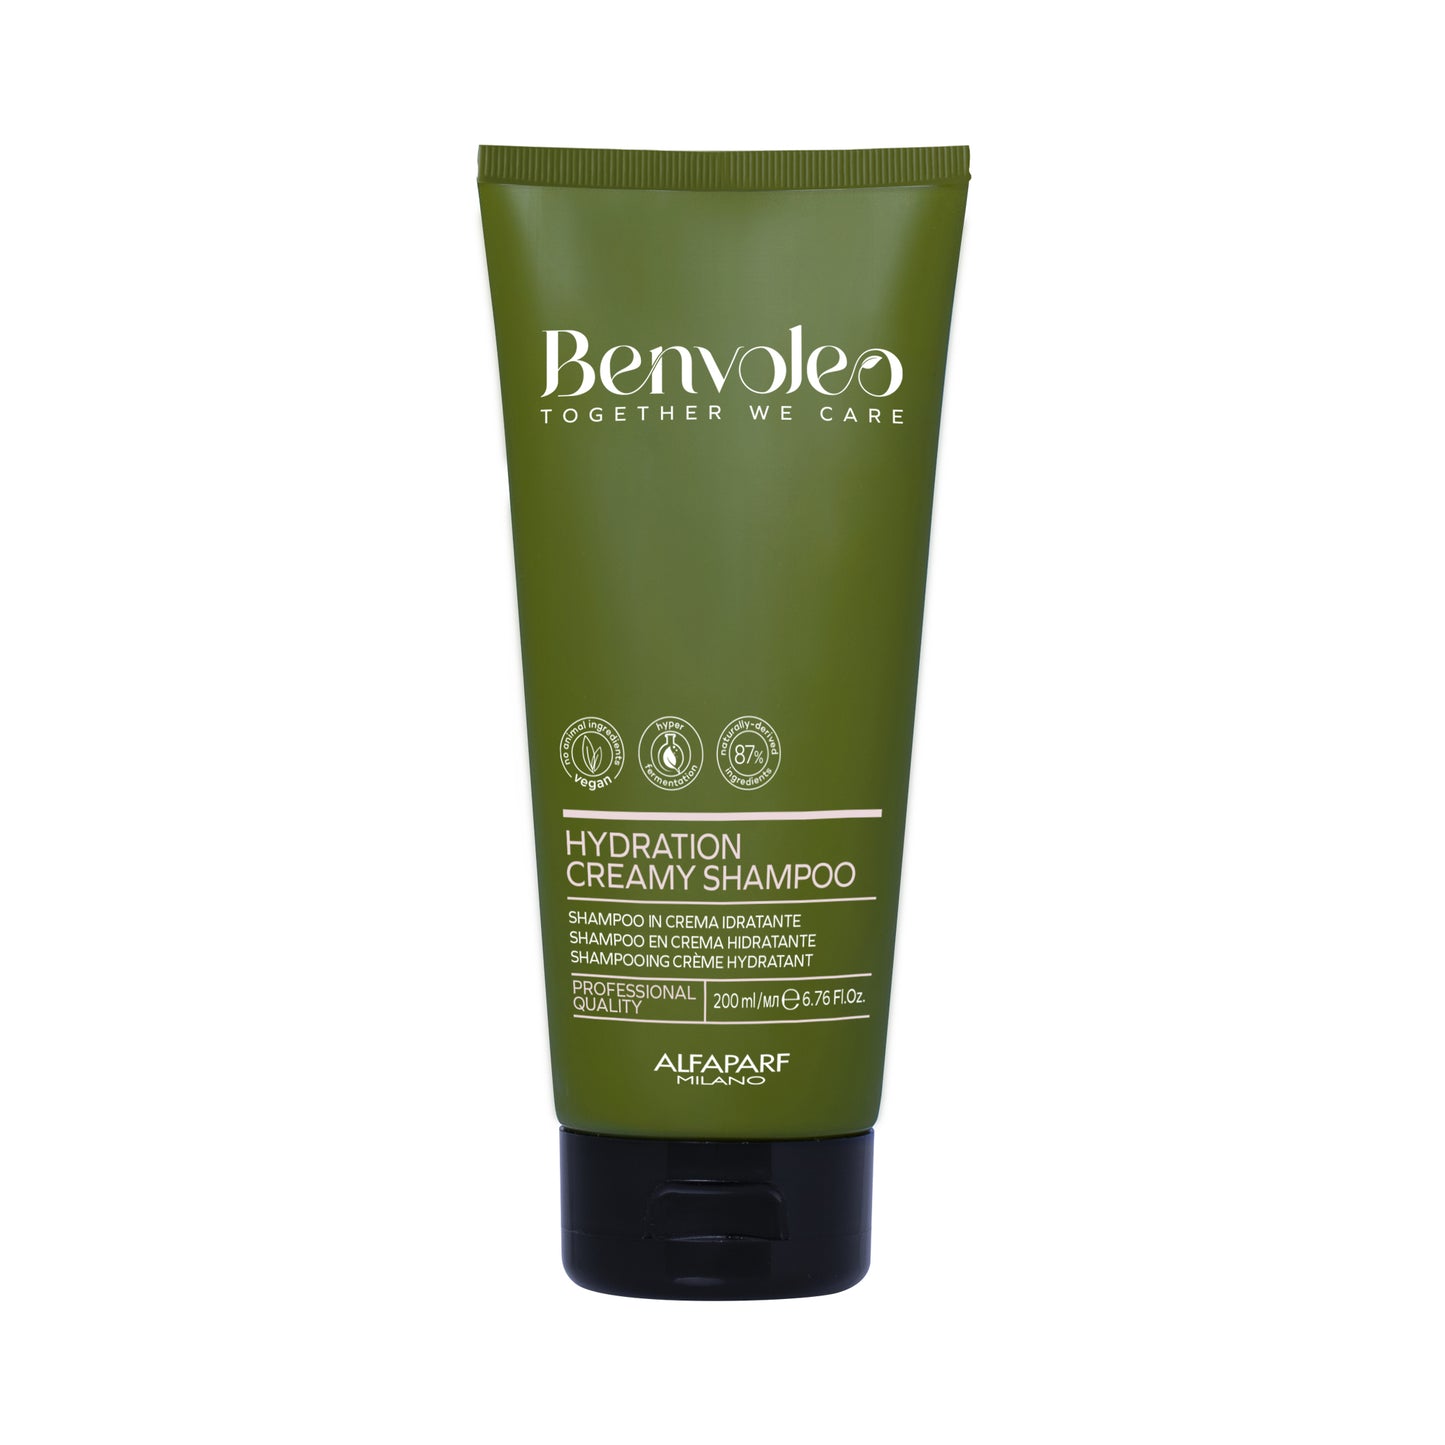 Benvoleo / Hydration Creamy Shampoo - Shampoo in crema idratante